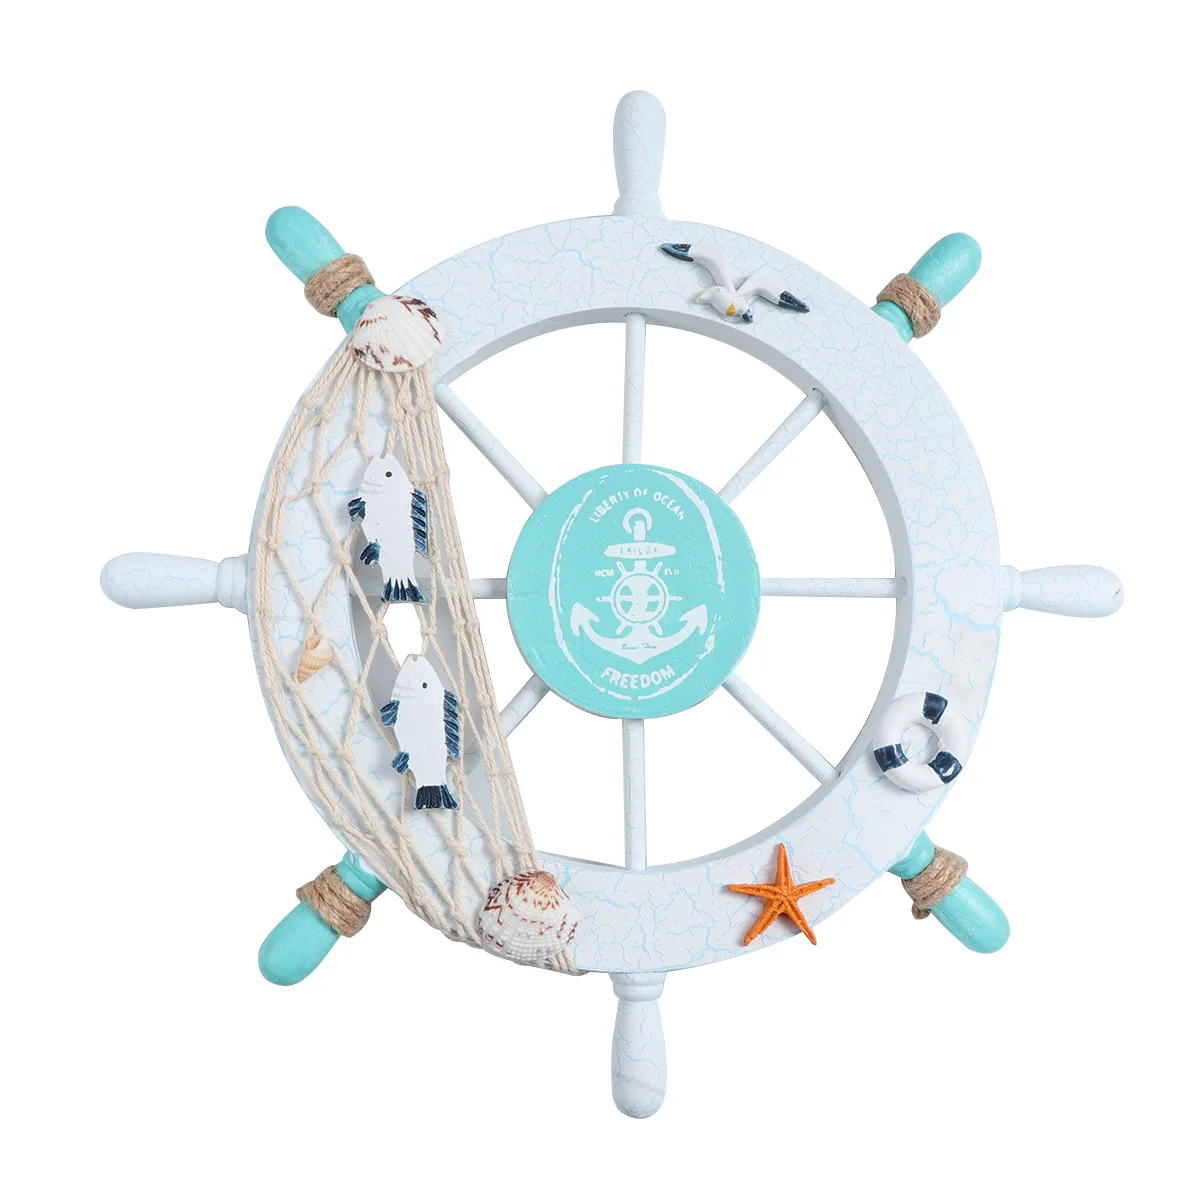 

Nautical Wooden Ship Wheel: Wooden Nautical Ship Steering Wheel Wall Mediterranean Wall Hanging Decor Ornament for Cafe Garden